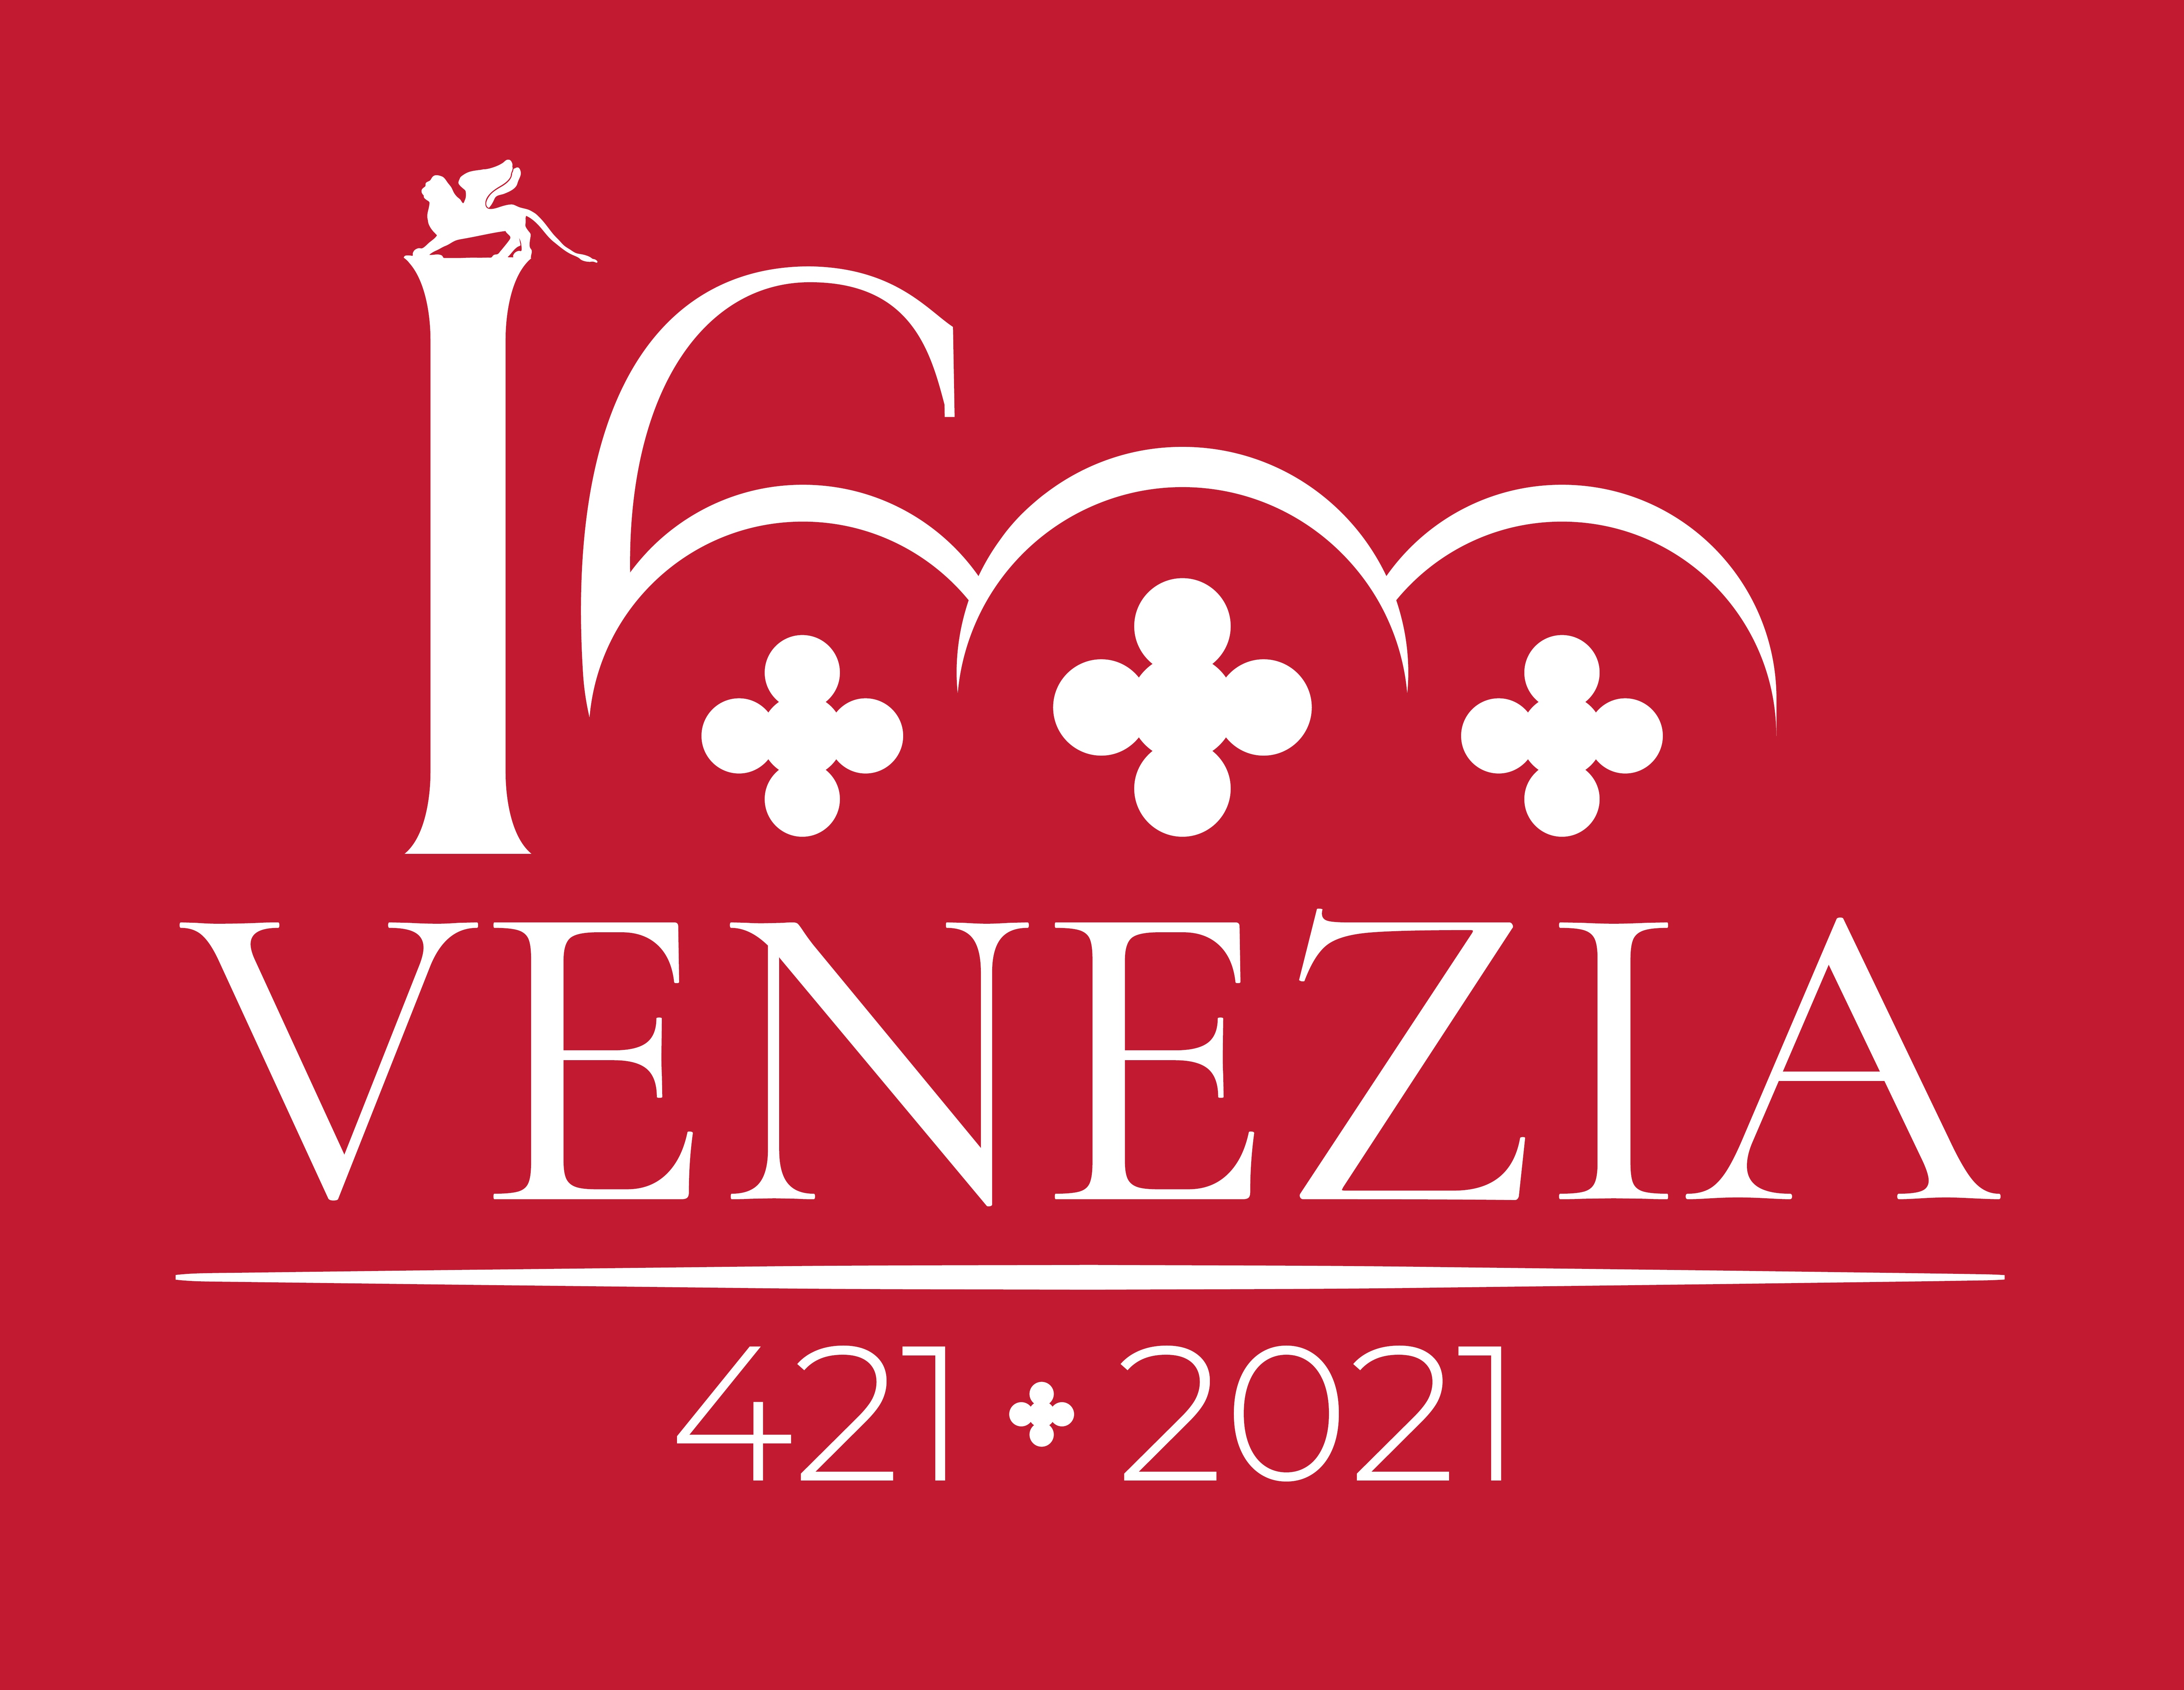 Image_01_Logo Venezia 1600